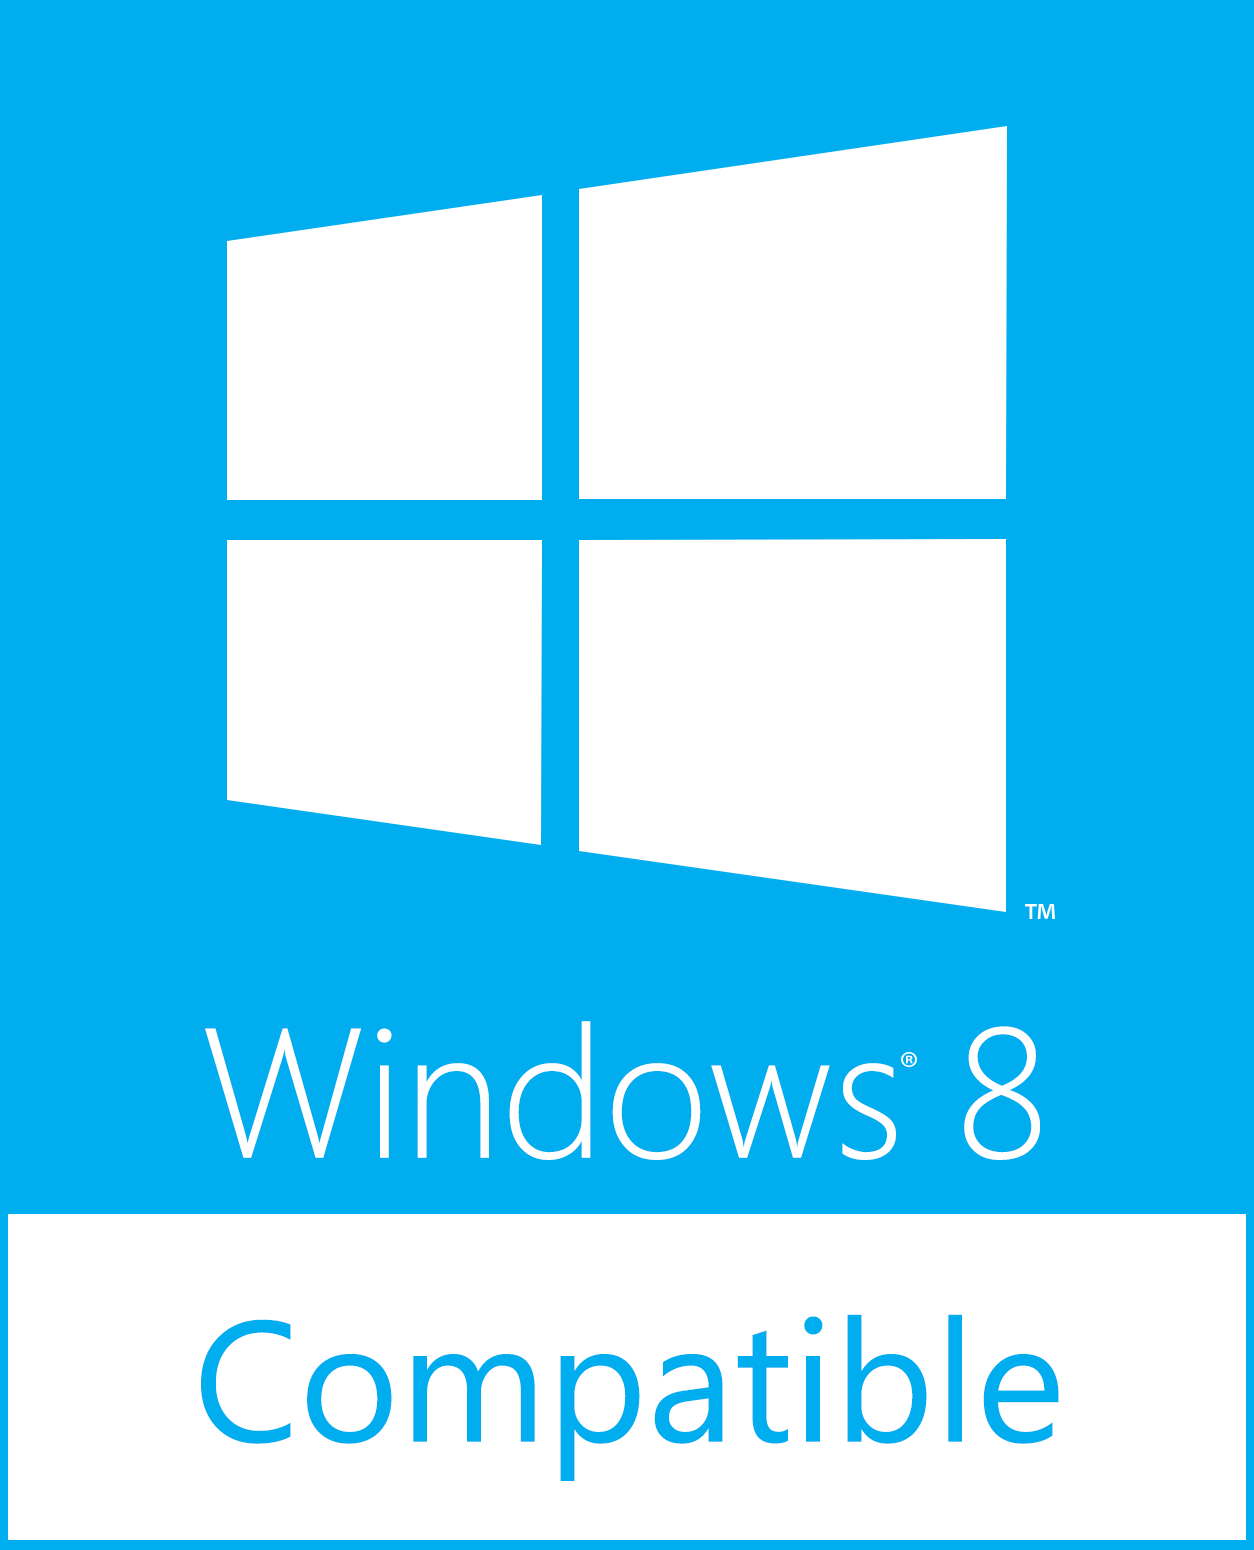 Windows 8 Logo - Very Popular Logo: Logo Windows 8 (Part 01 )